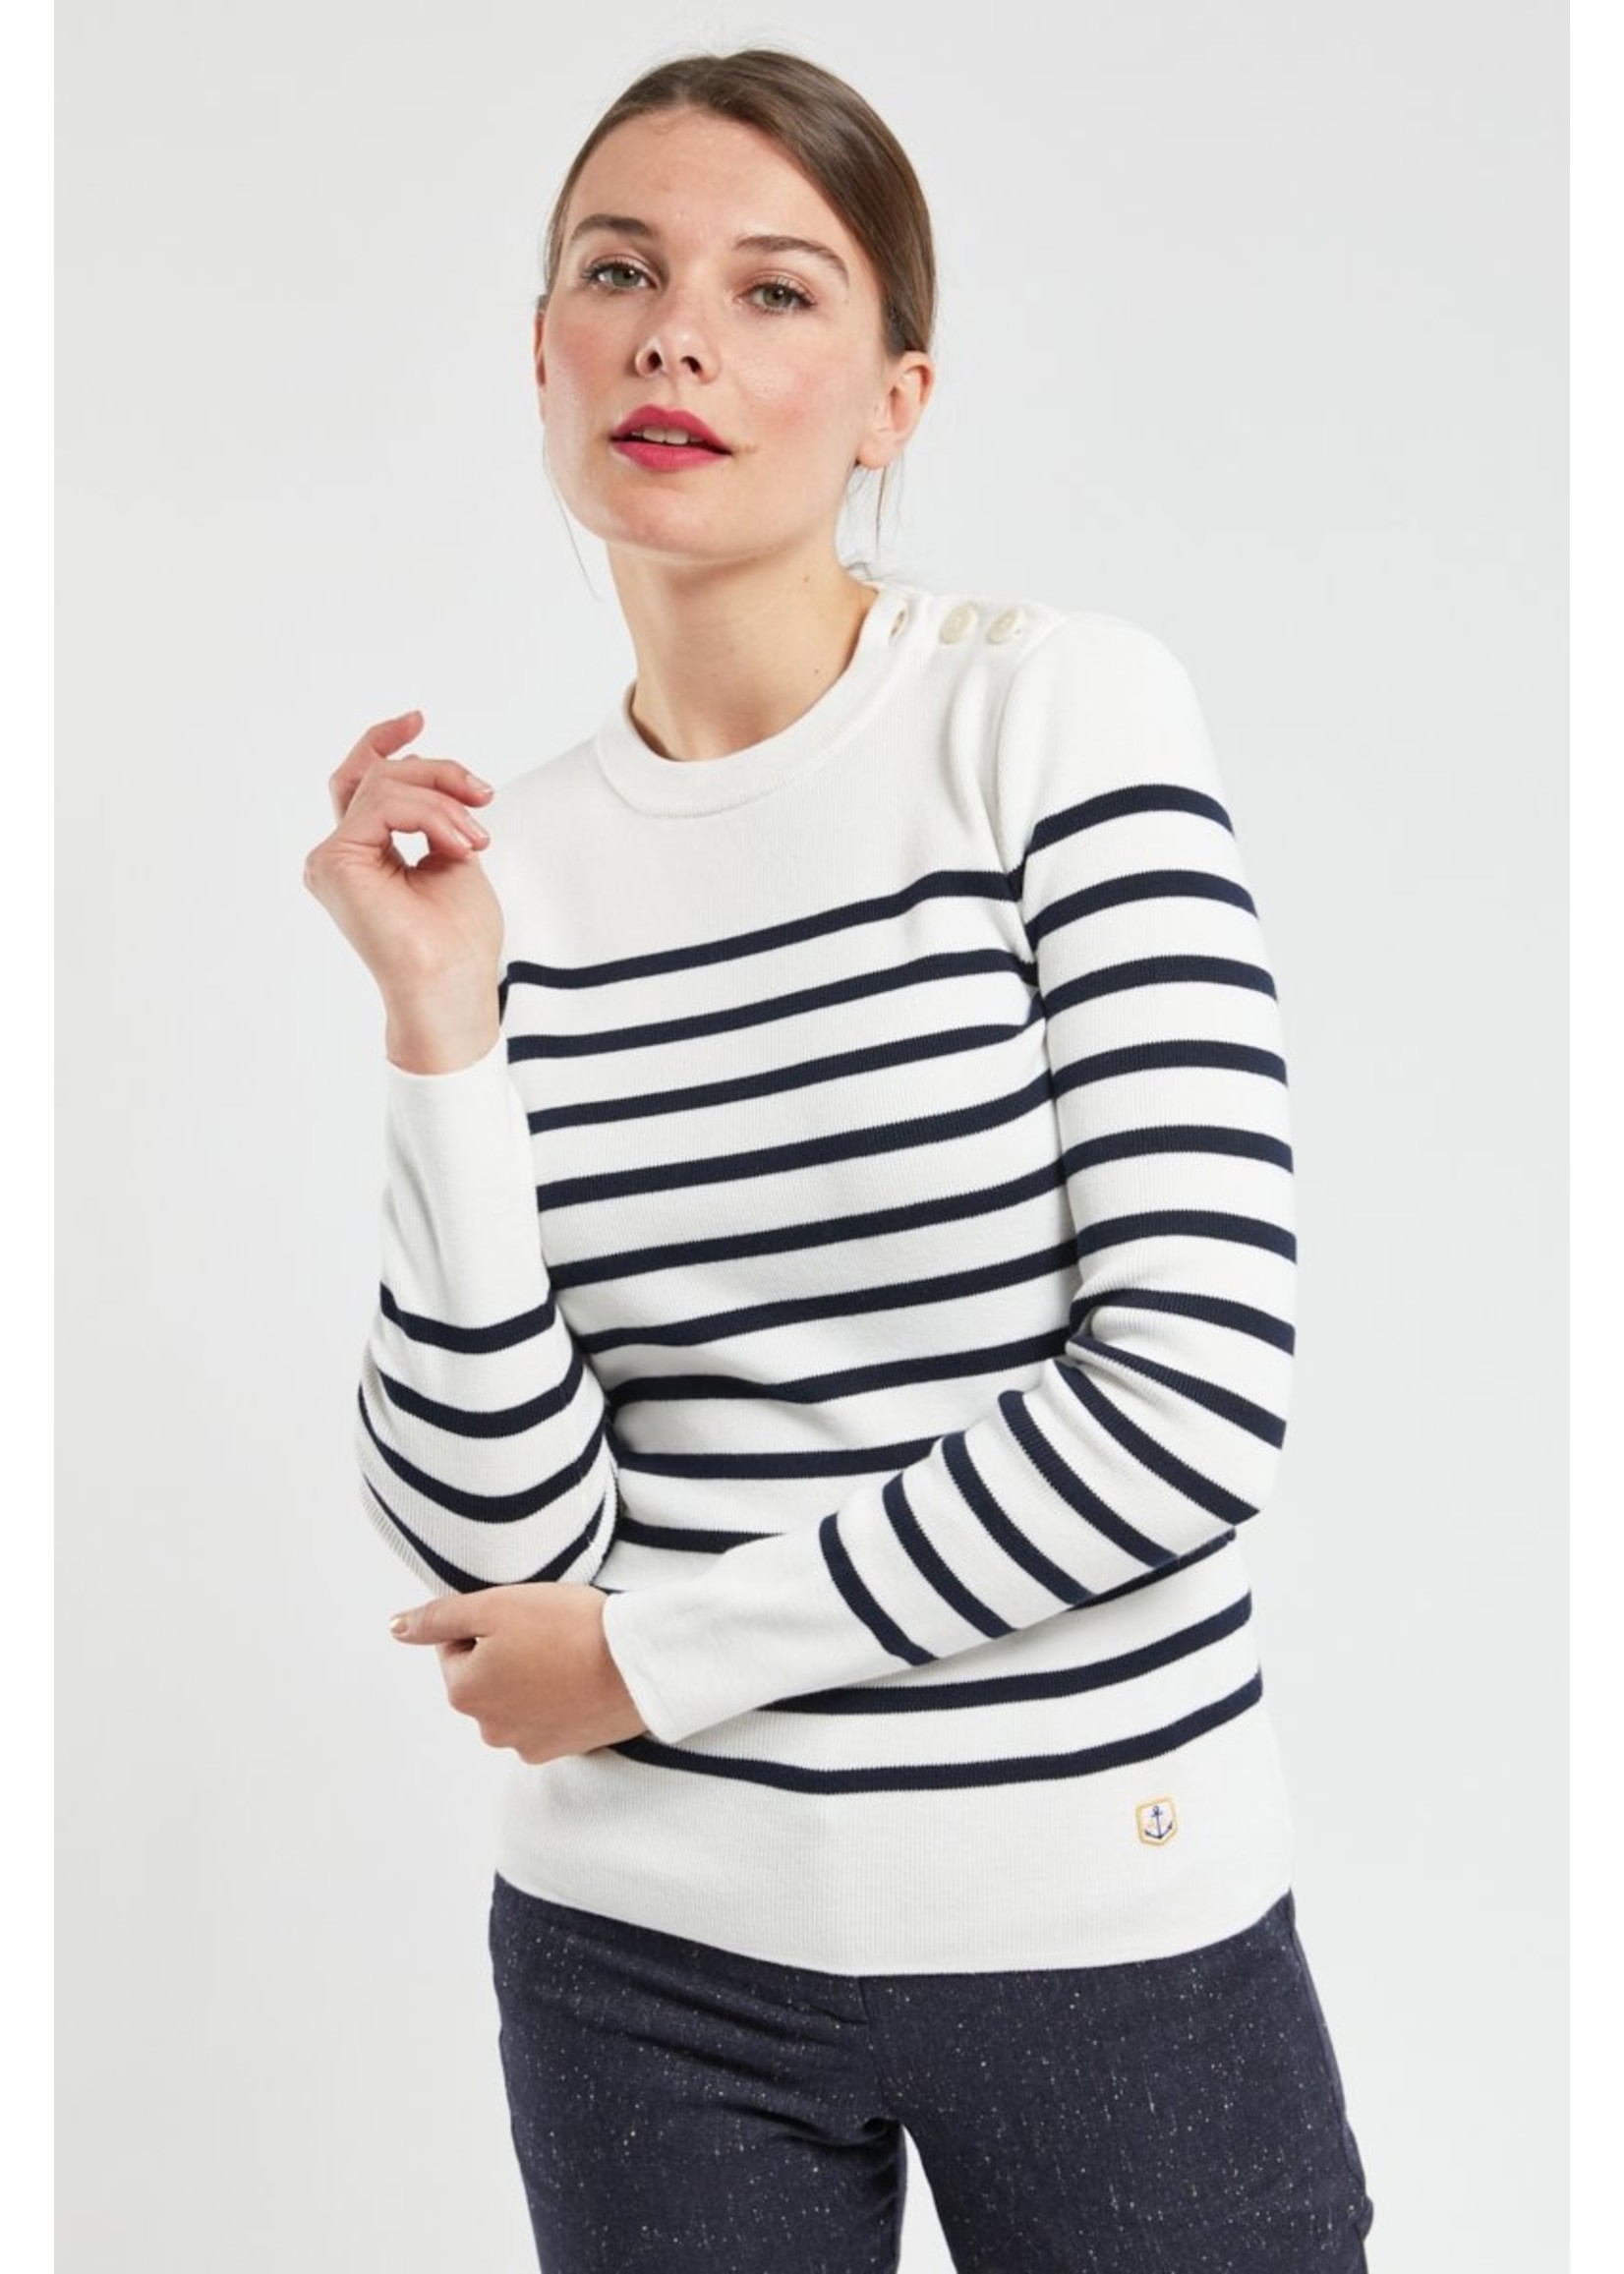 ARMOR-LUX Women's Sailor Groix Sweater